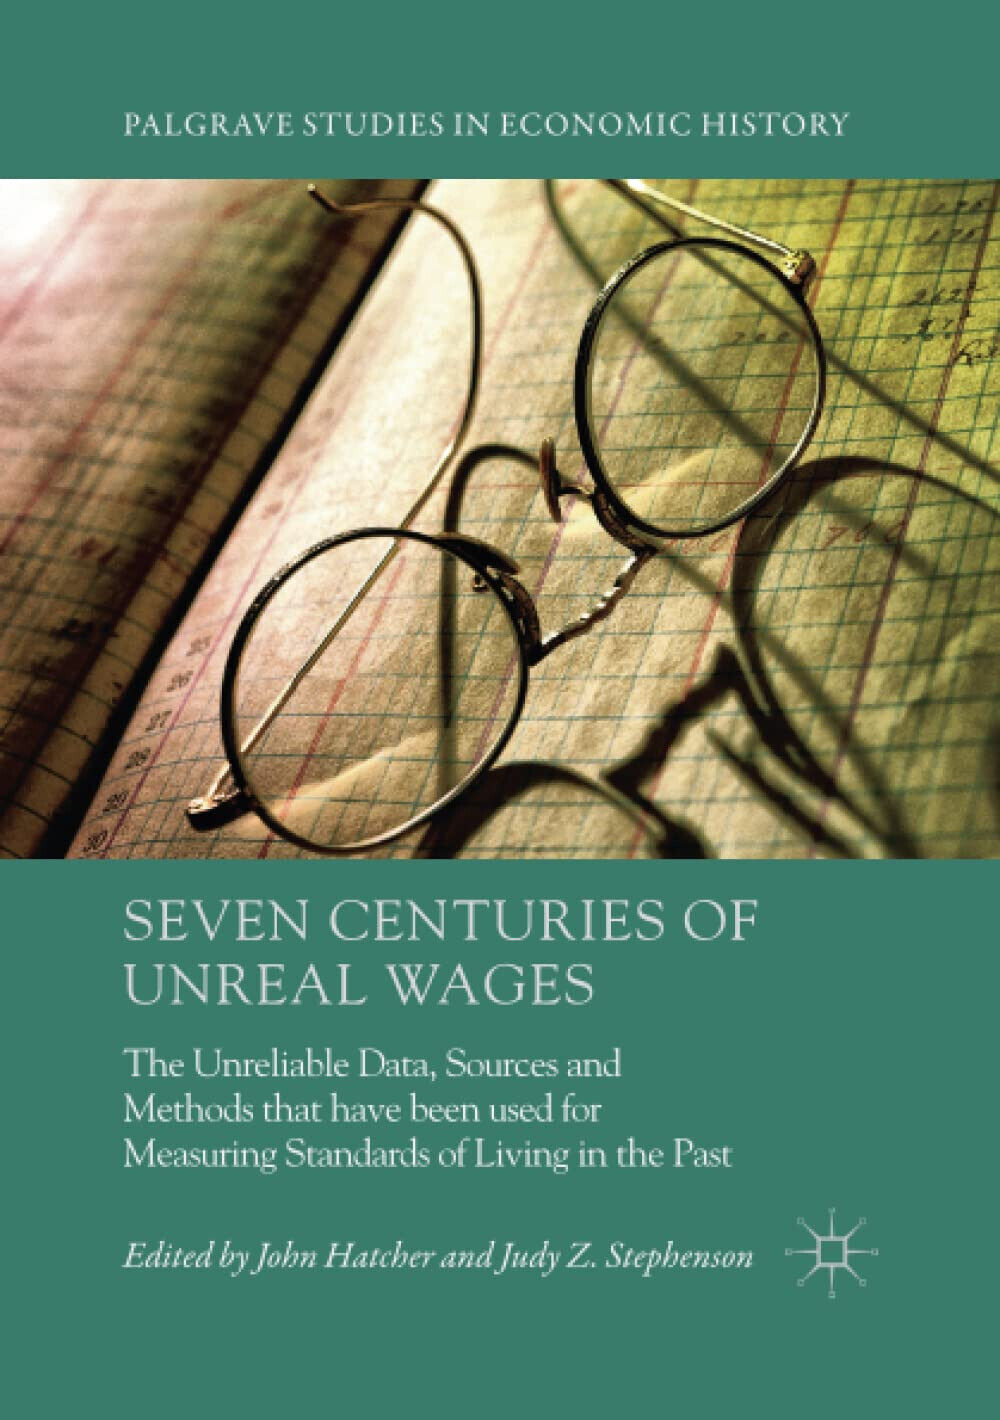 Seven Centuries Of Unreal Wages - John Hatcher - Palgrave, 2020